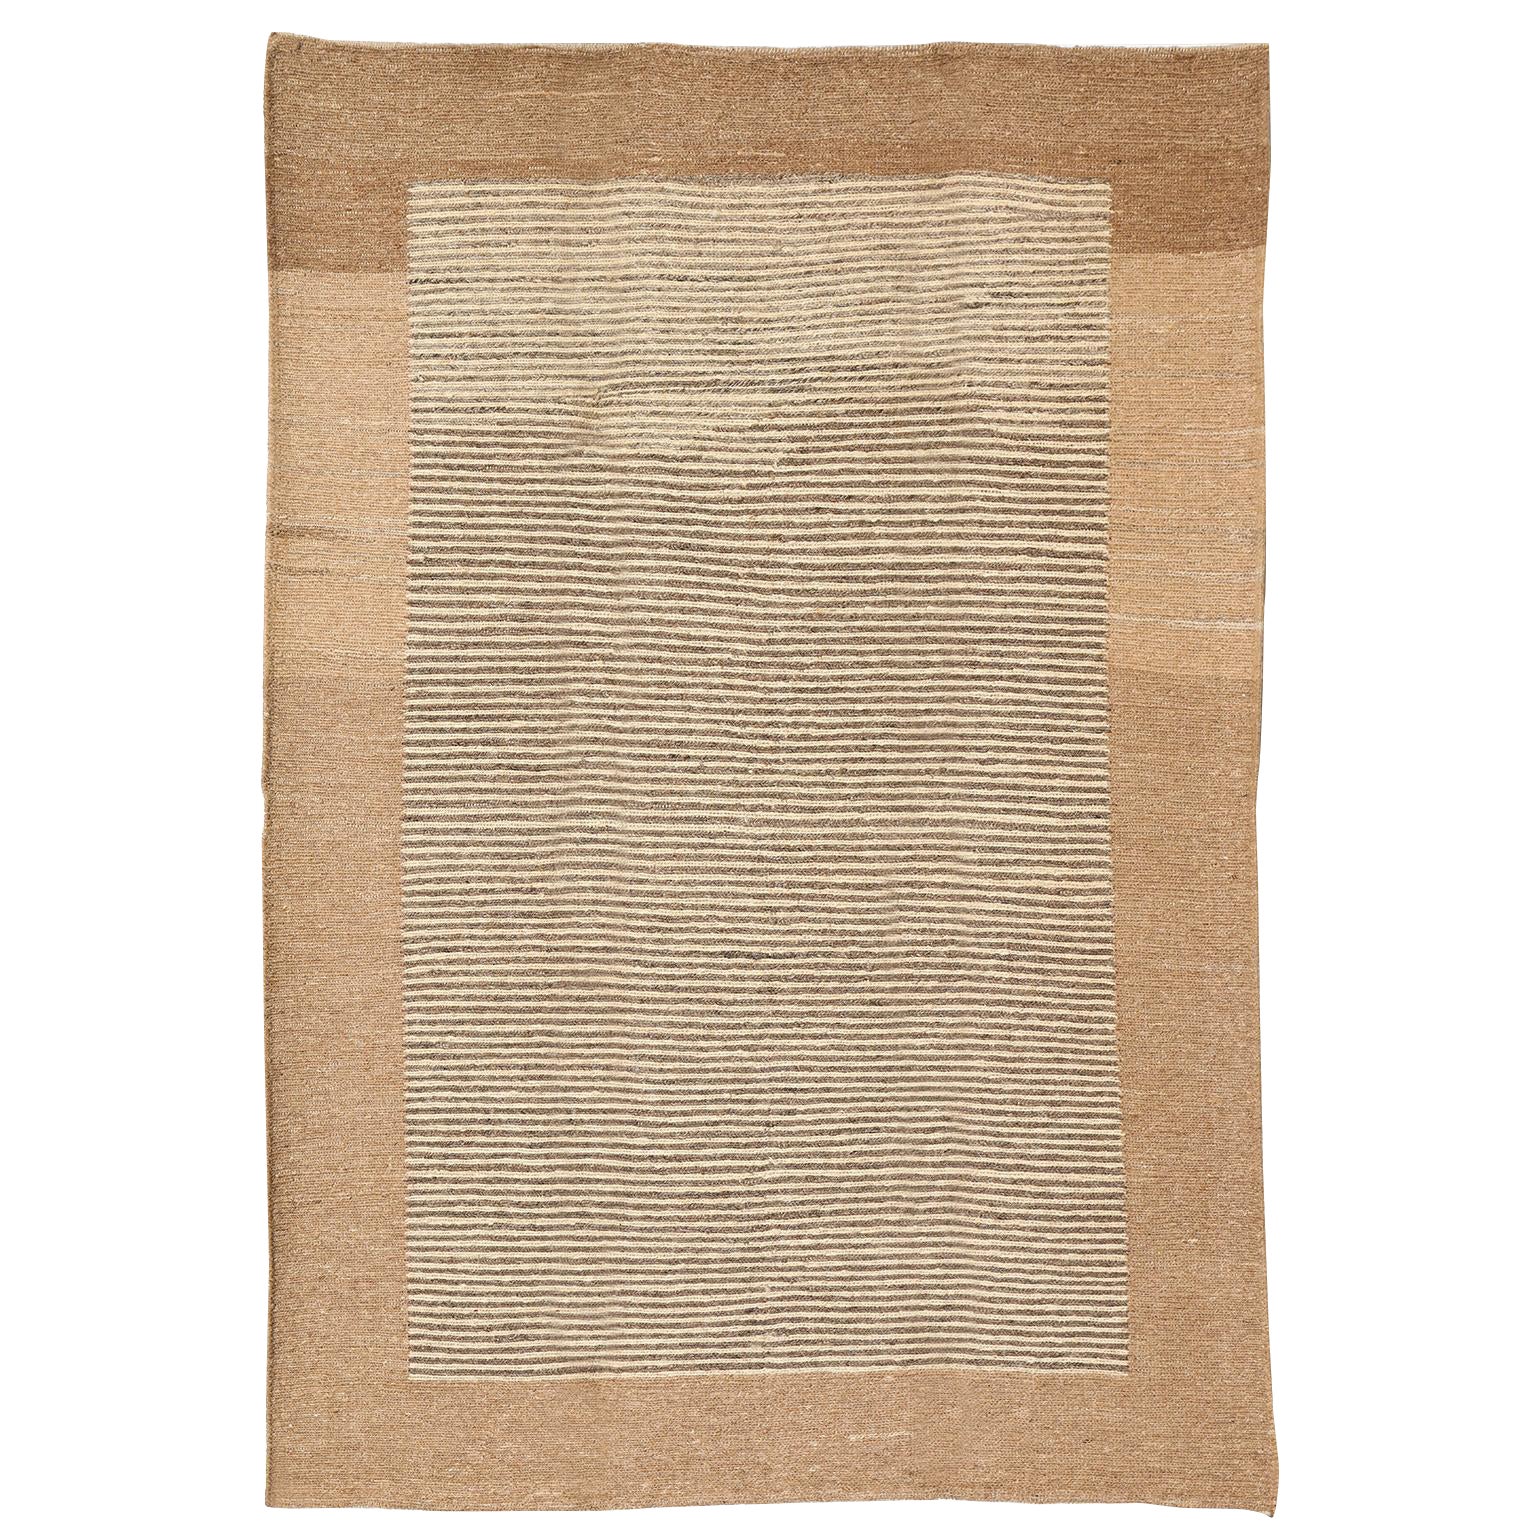 Orley Shabahang "Horizon" Wool Persian Flat-Weave Rug, Neutral, 5' x 7'